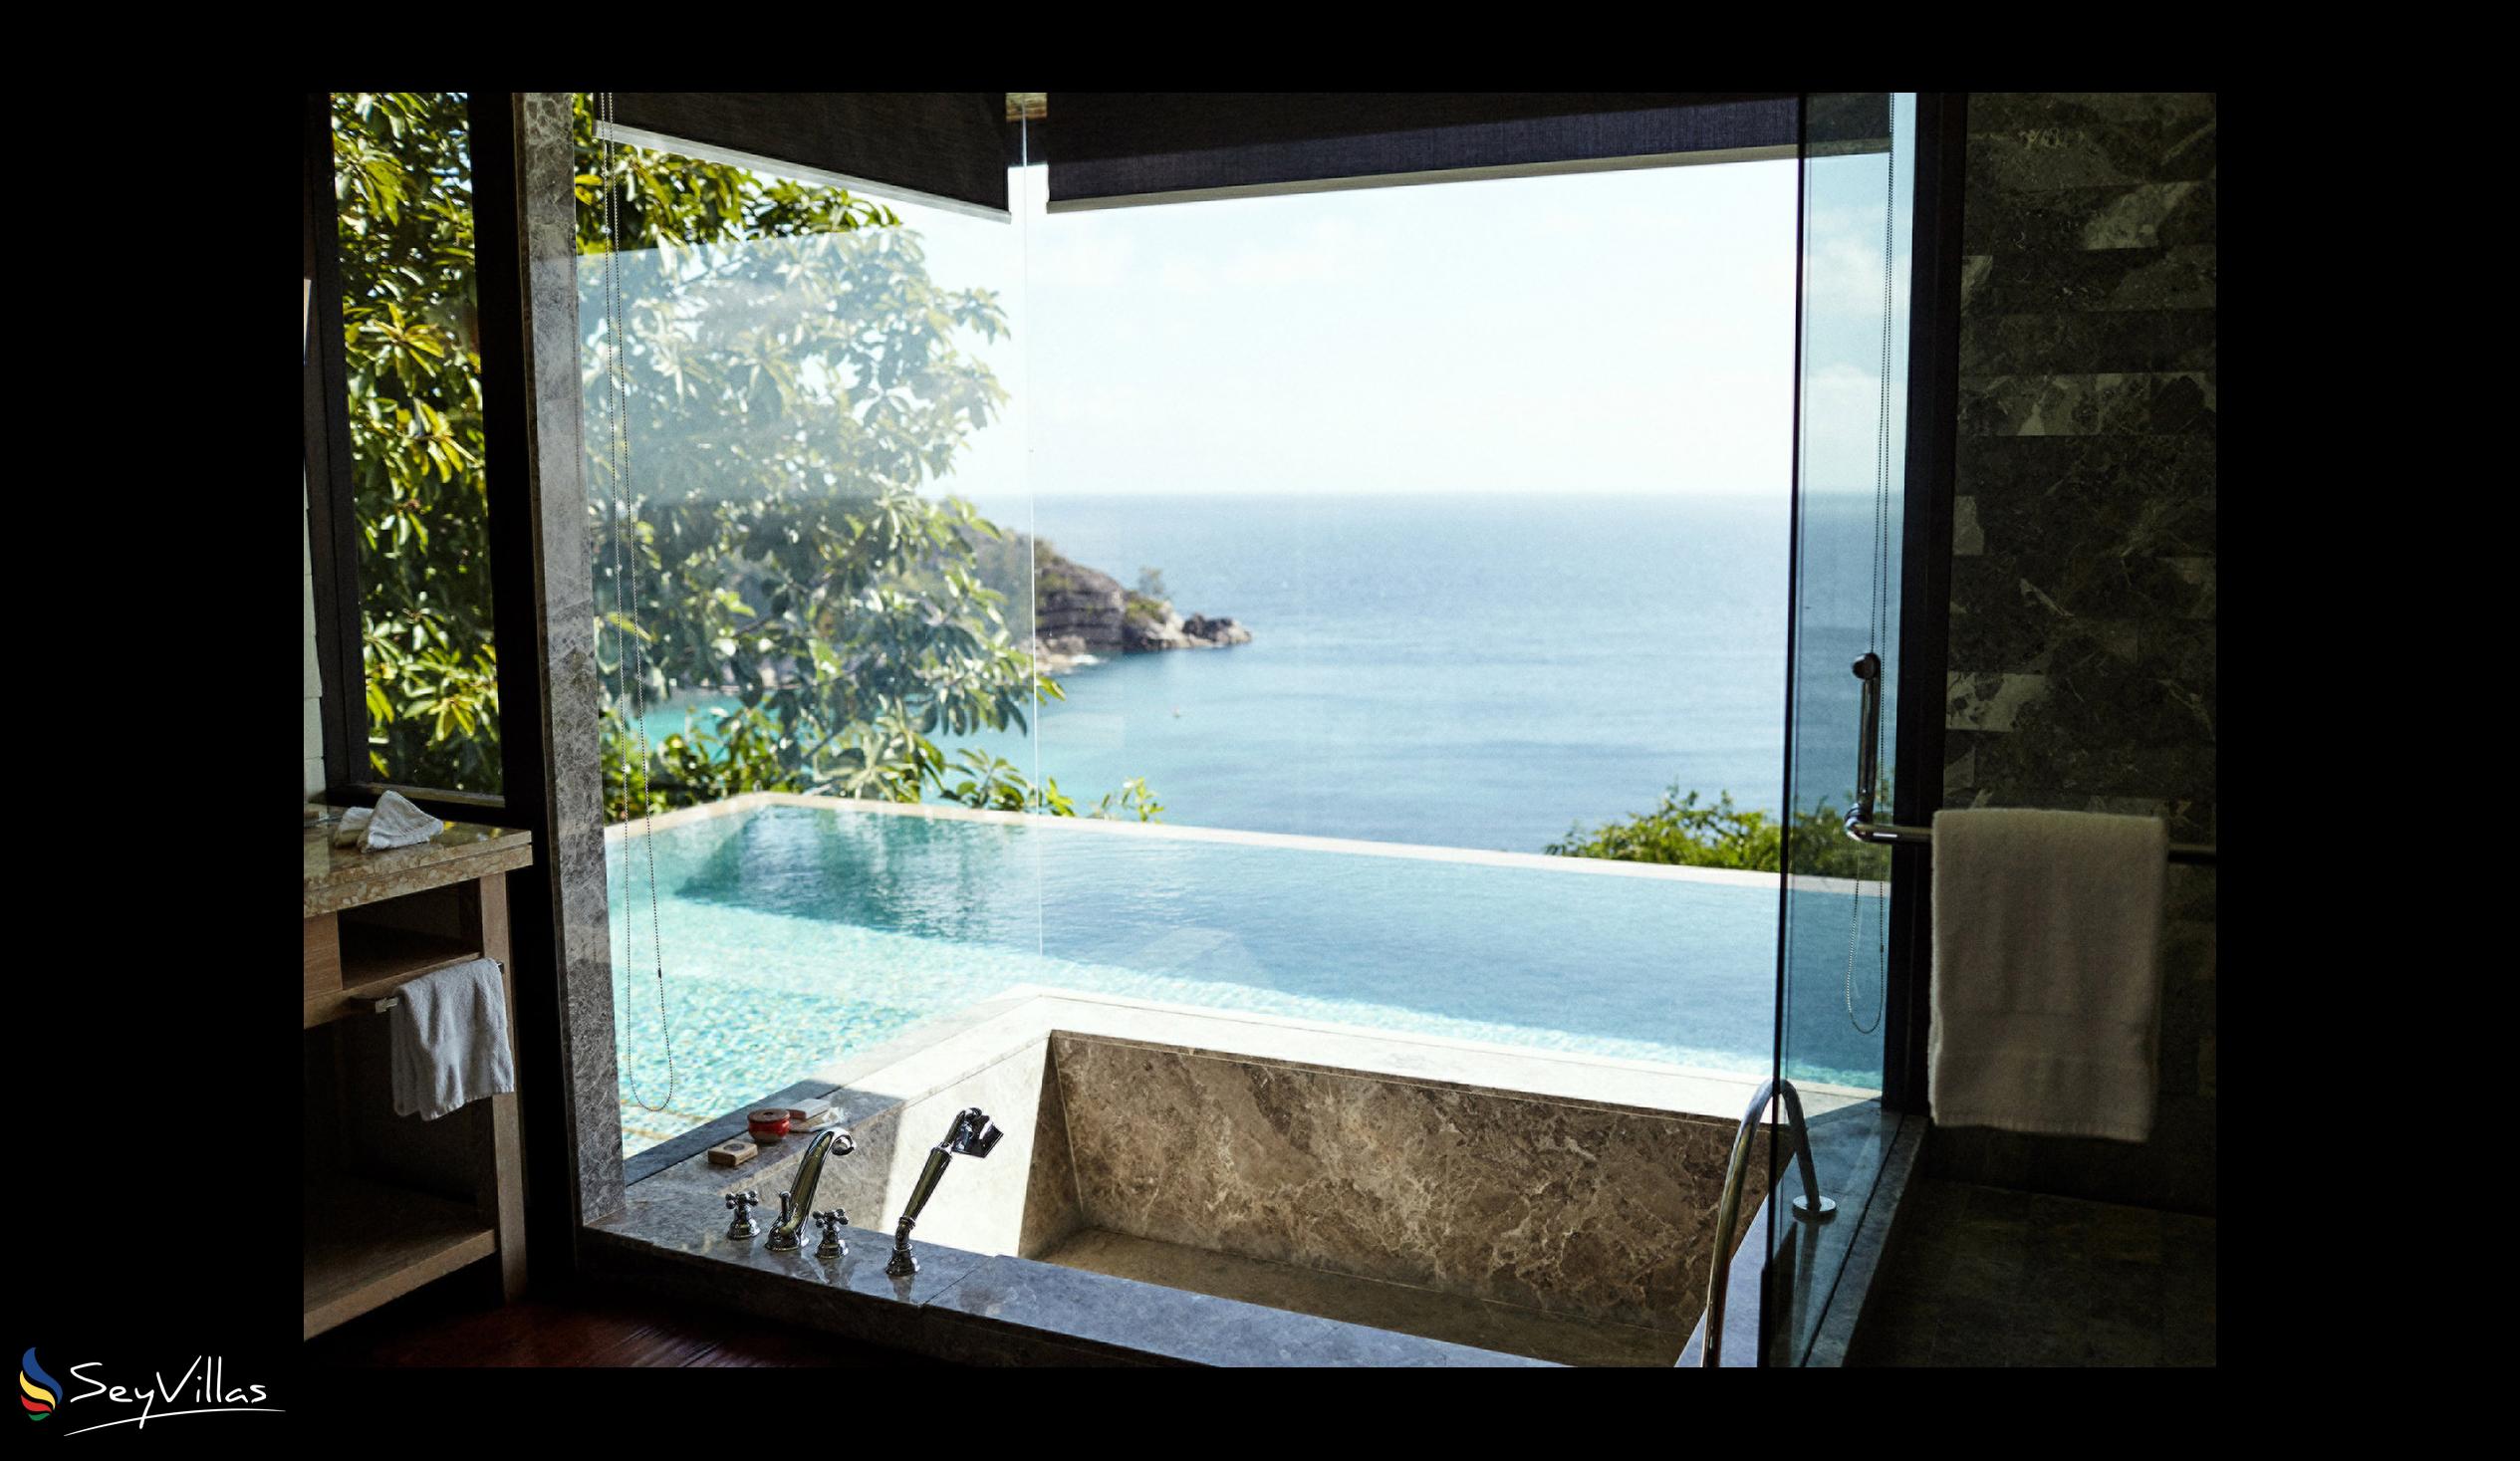 Foto 32: Four Seasons Resort - Ocean View Villa - Mahé (Seychelles)